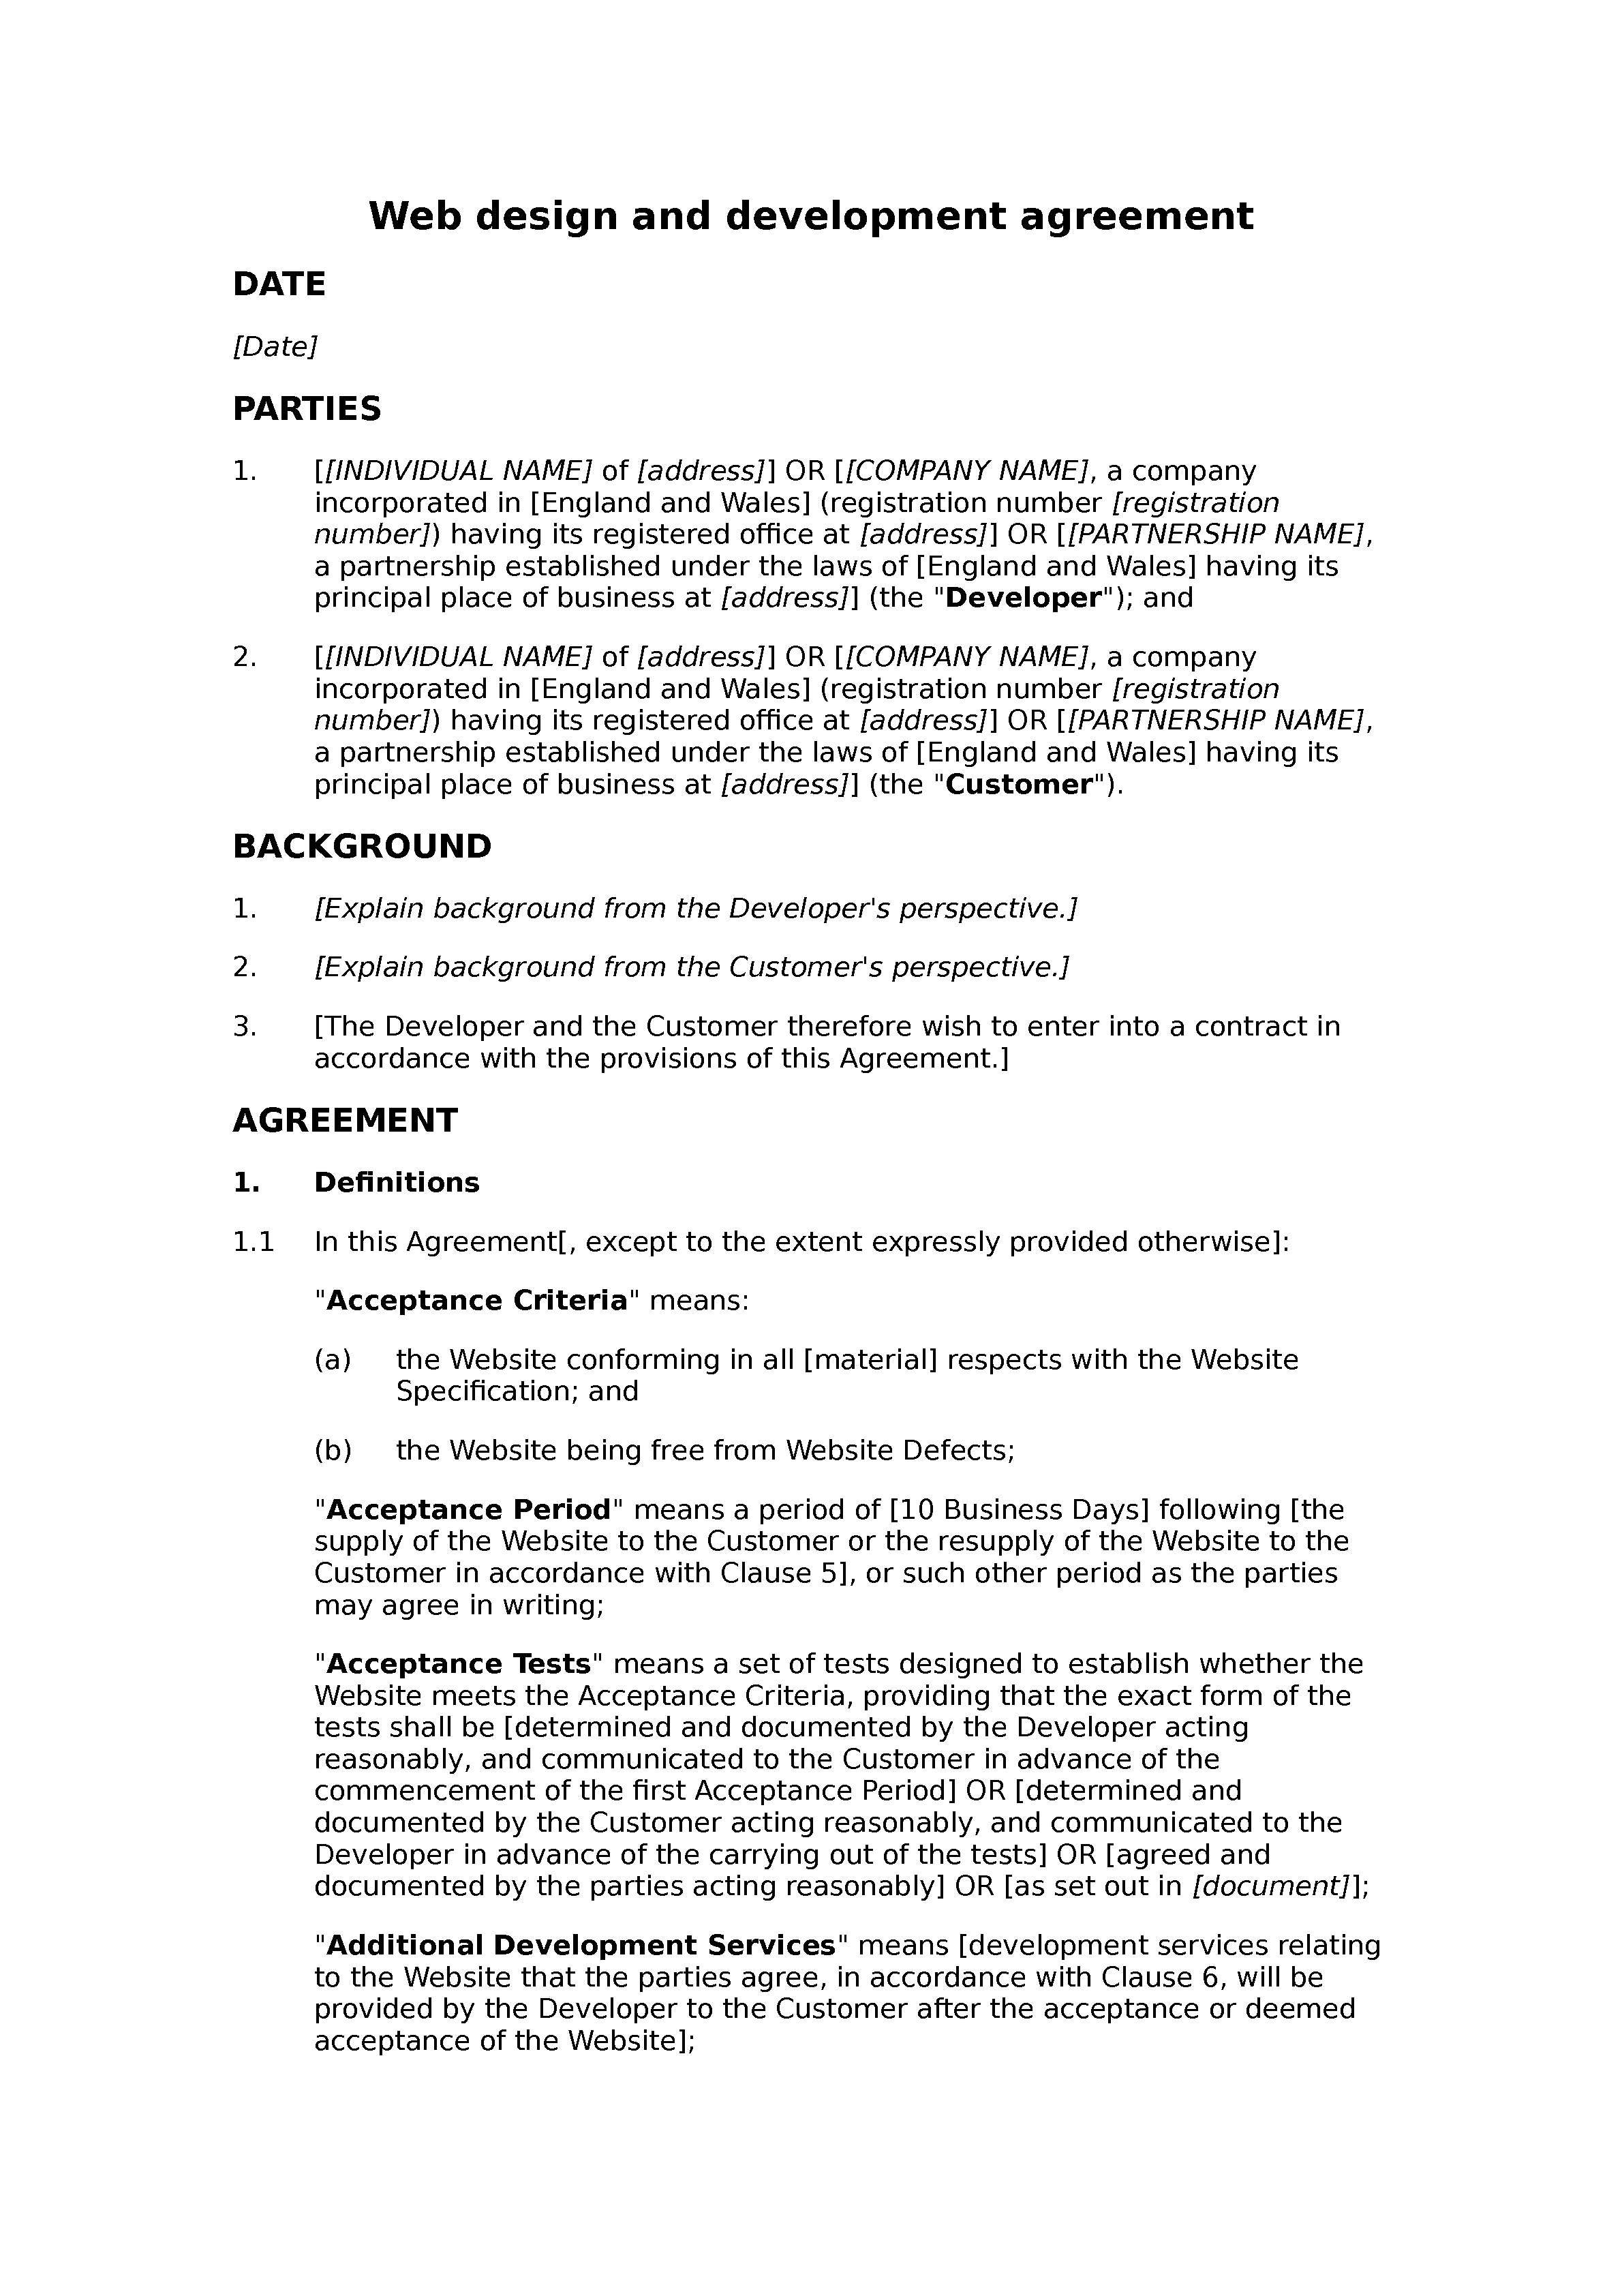 Web design and development agreement (premium) document preview